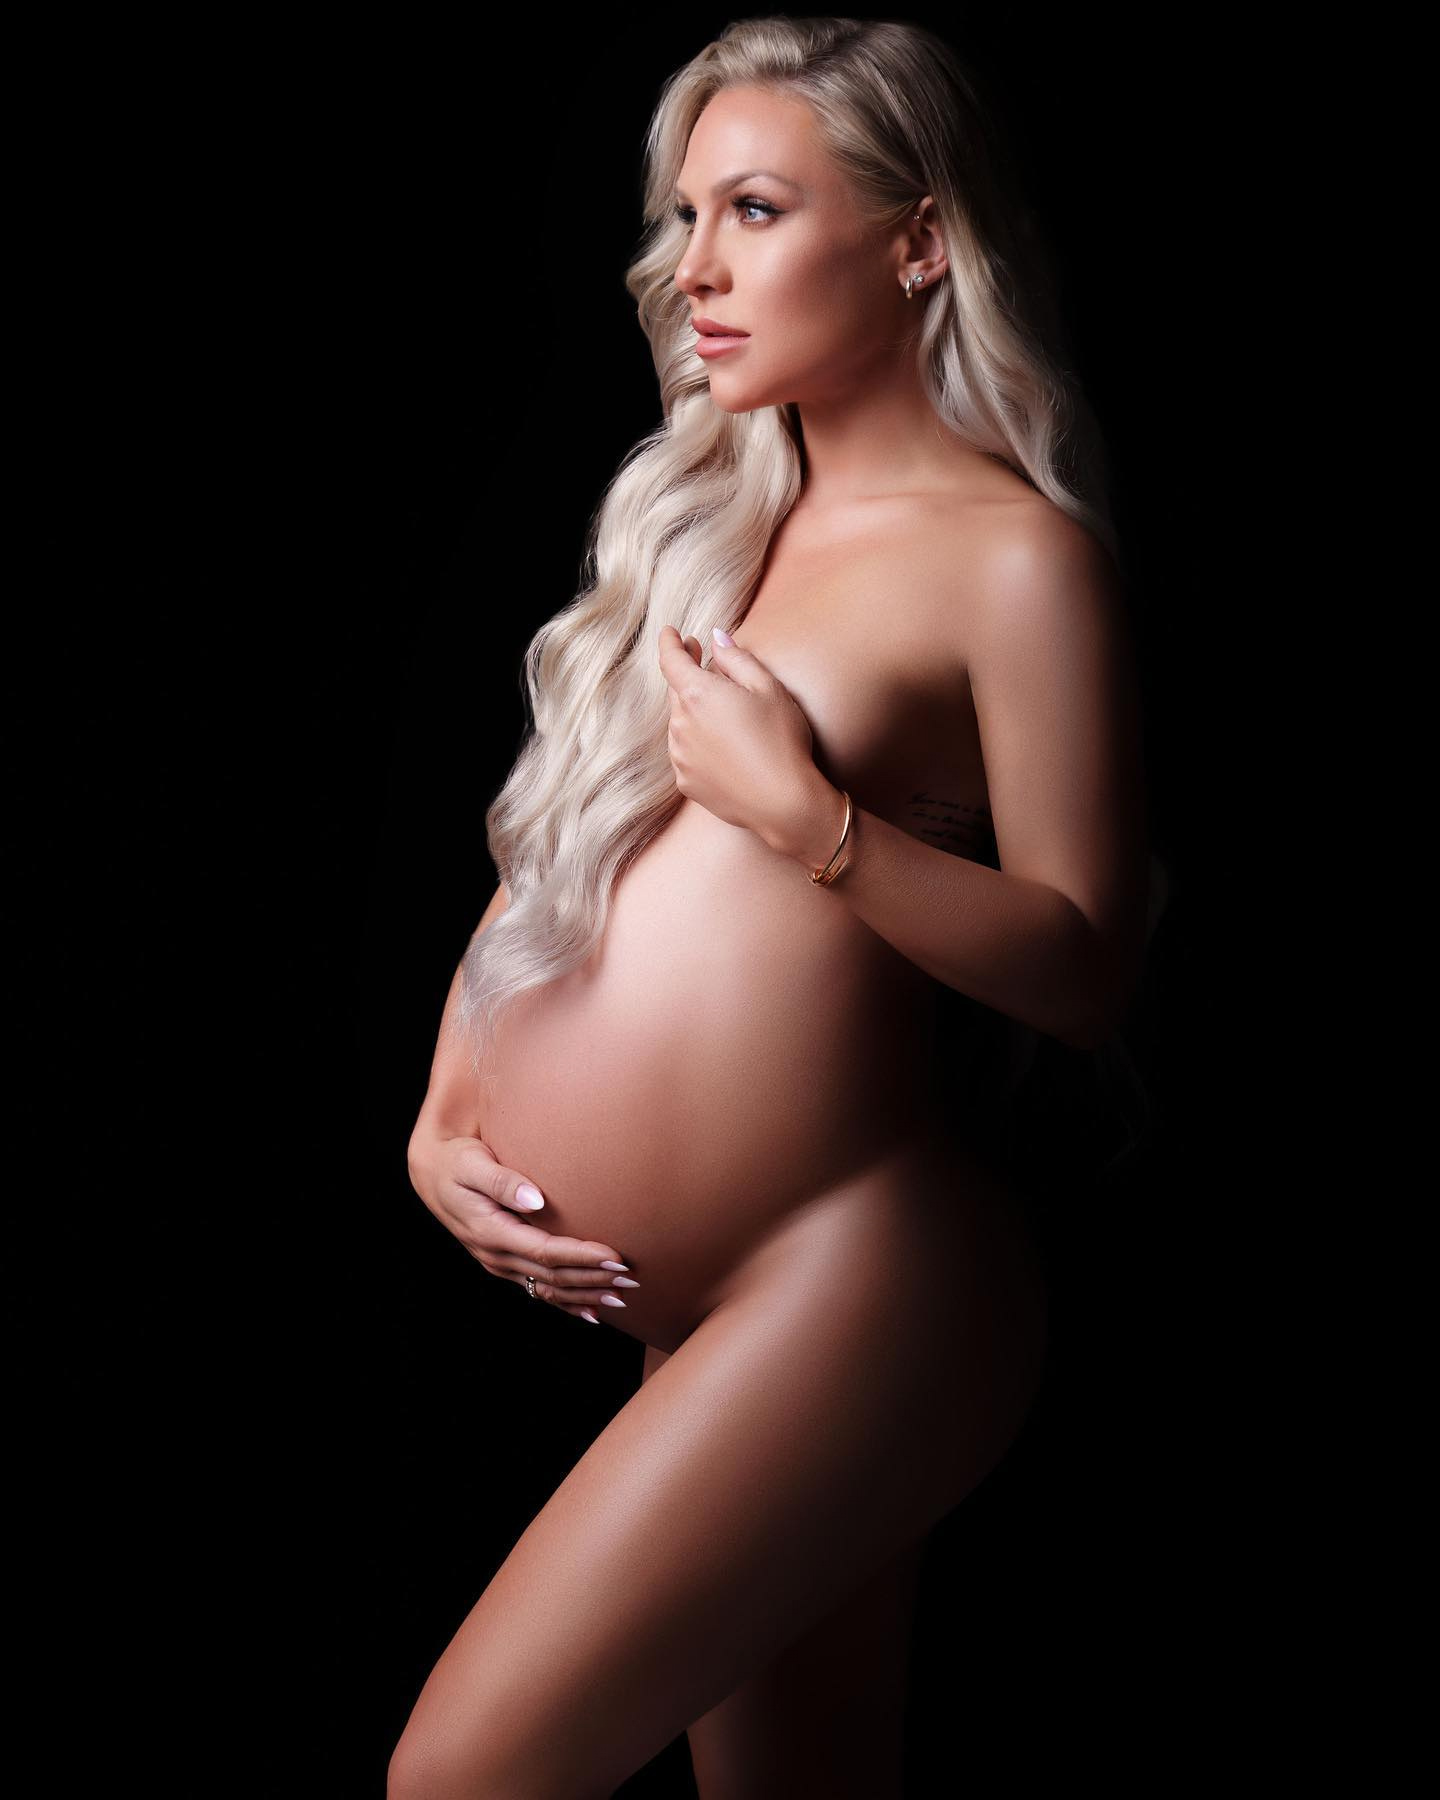 Pregnant Sharna Burgess Poses Nude